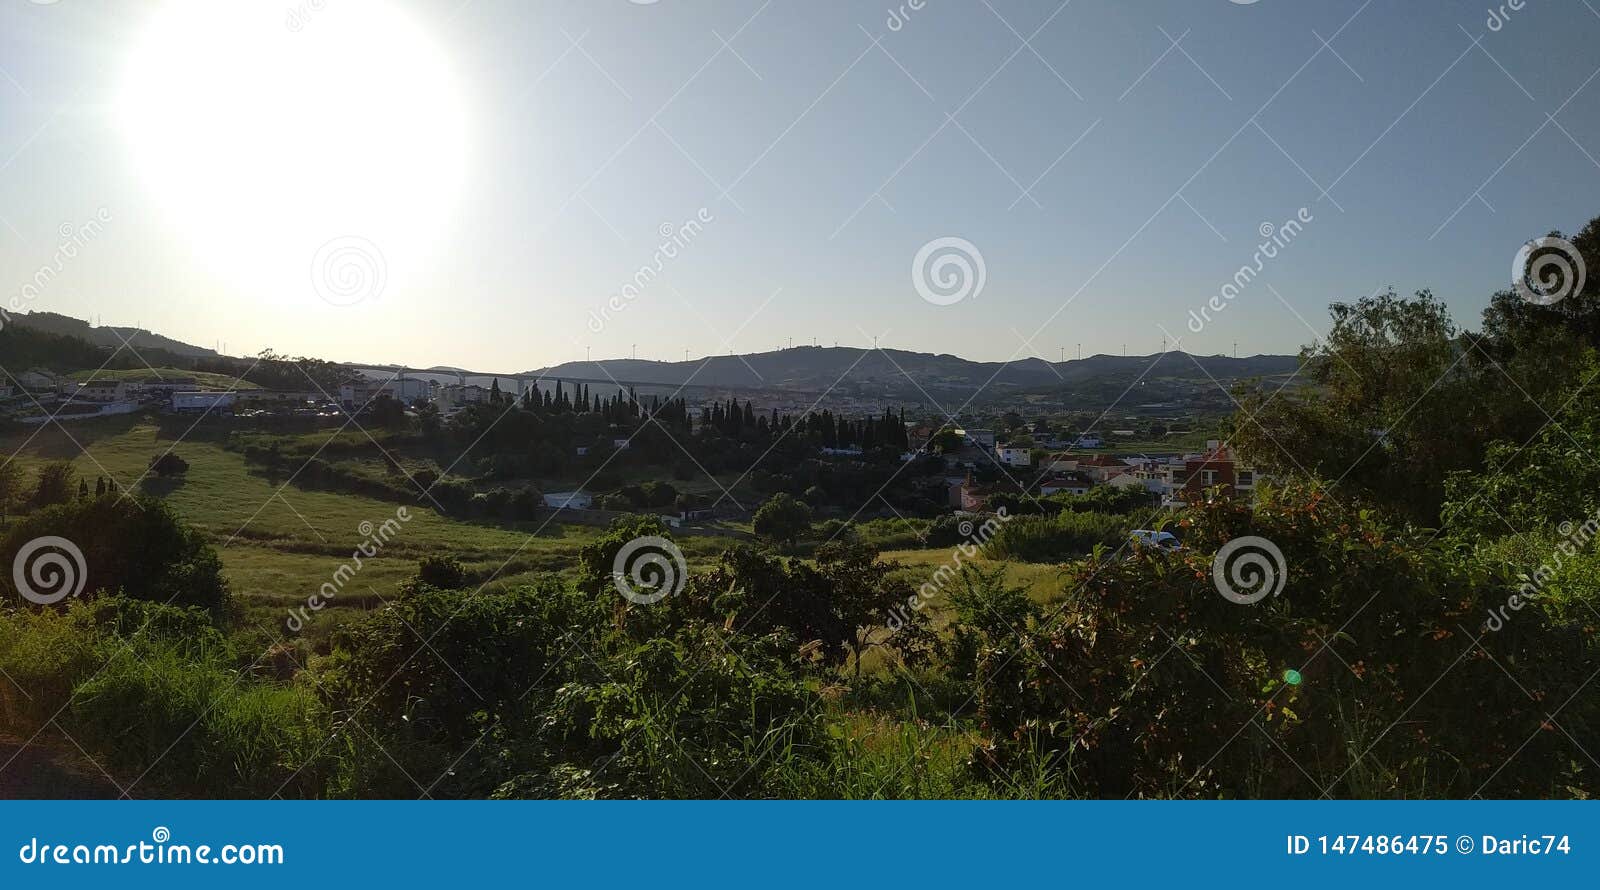 landscape of hills in loures, portugal